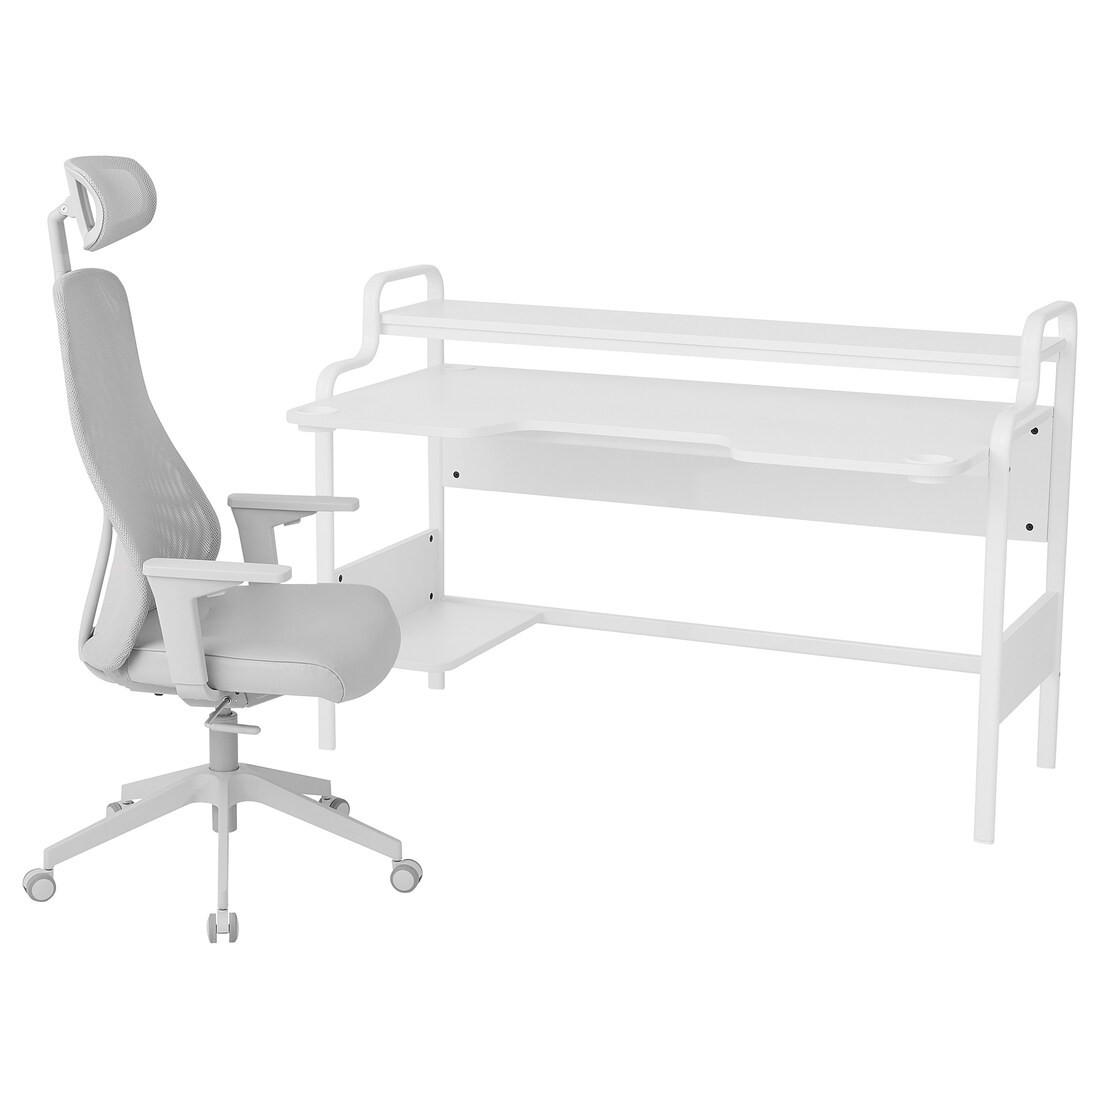 FREDDE / MATCHSPEL Геймерский стол и стул, белый / светло-серый, 74 см